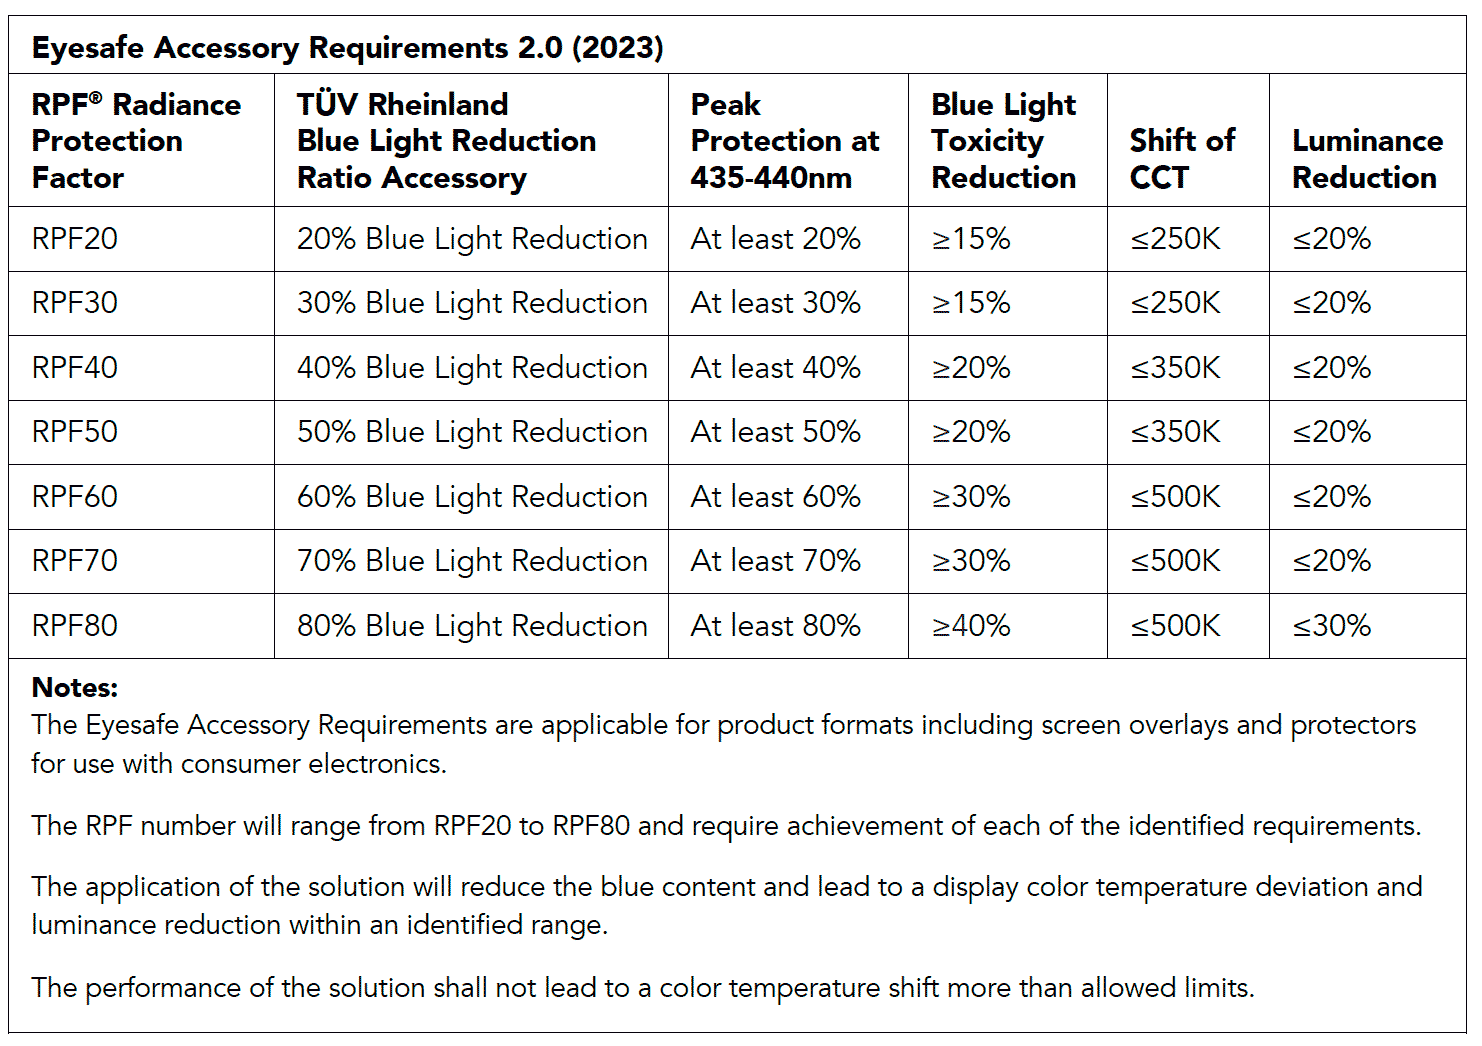 RPF for Accessory % Blue Light Reduction